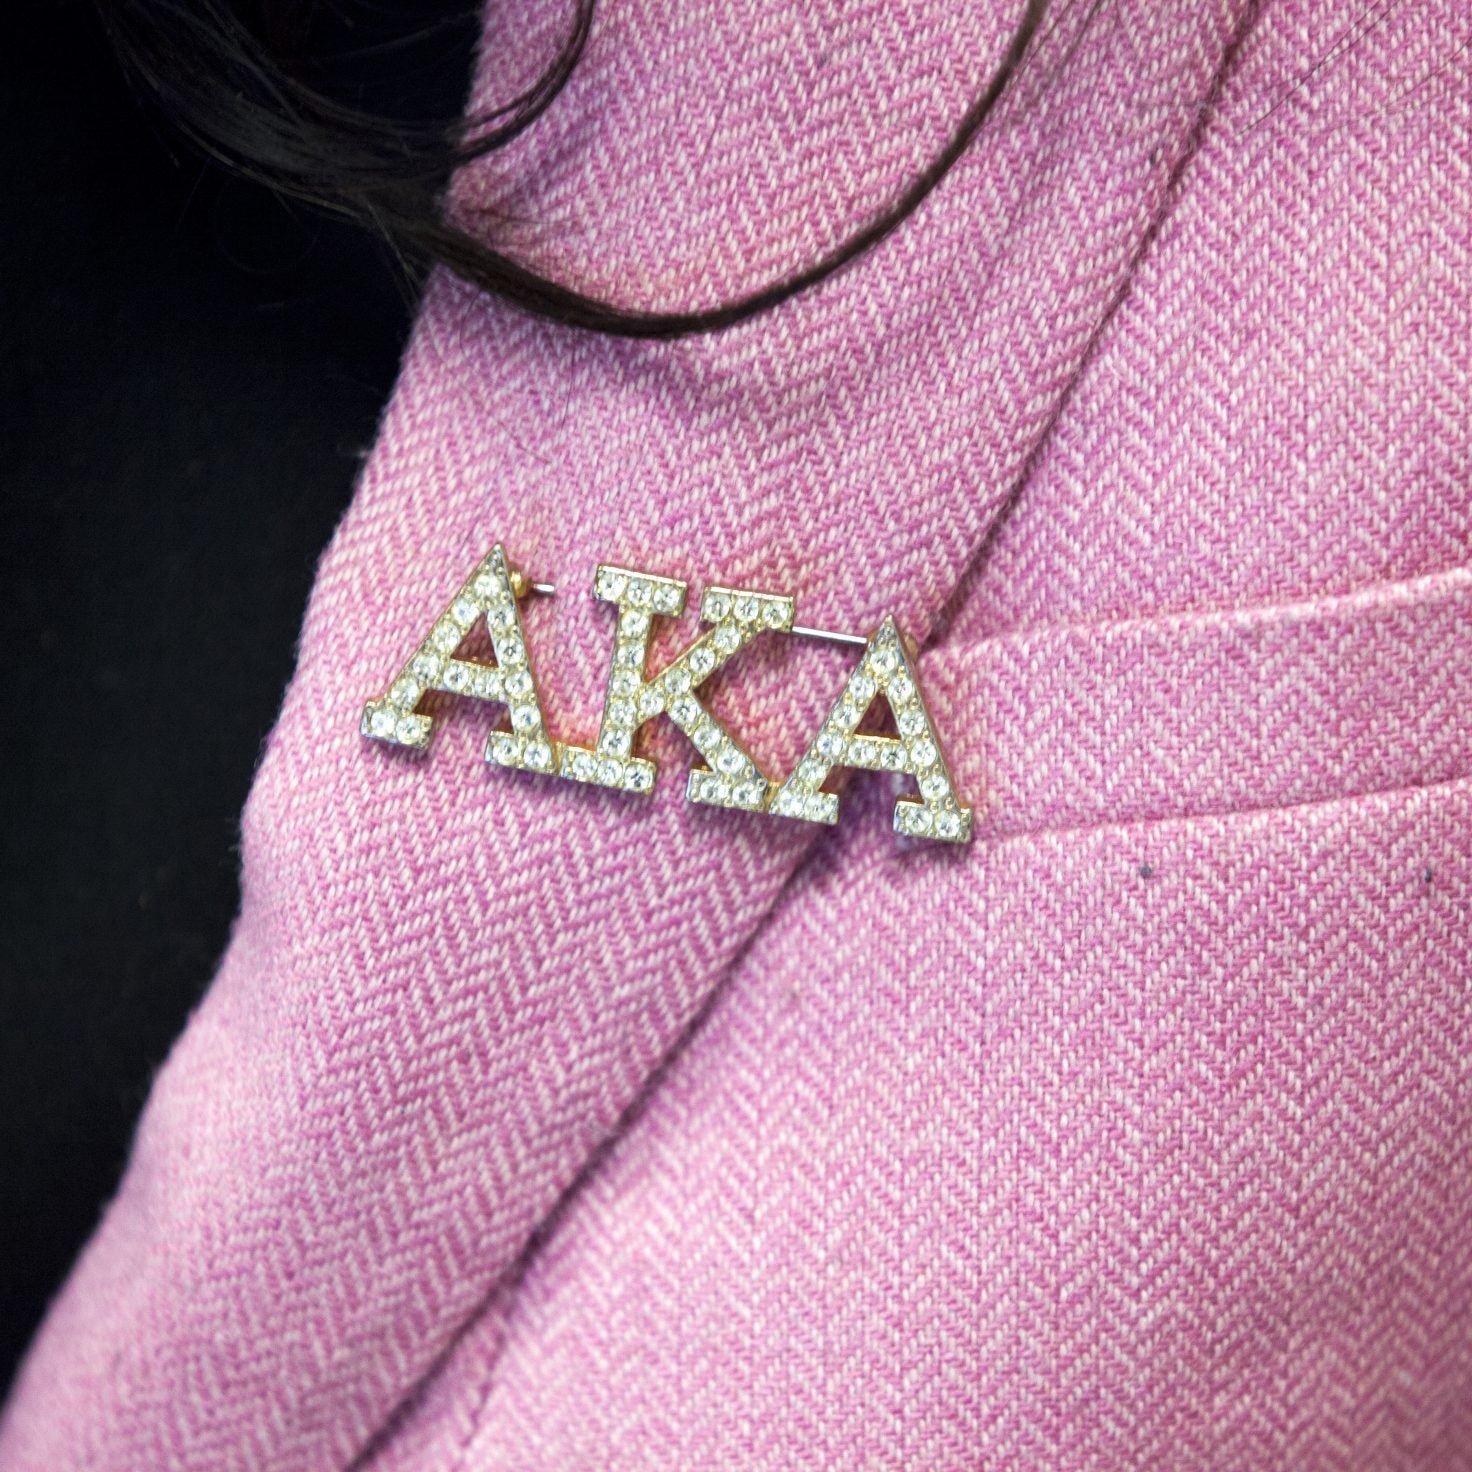 Alpha Kappa Alpha Sorority Donates $100,000 To Chicago State University